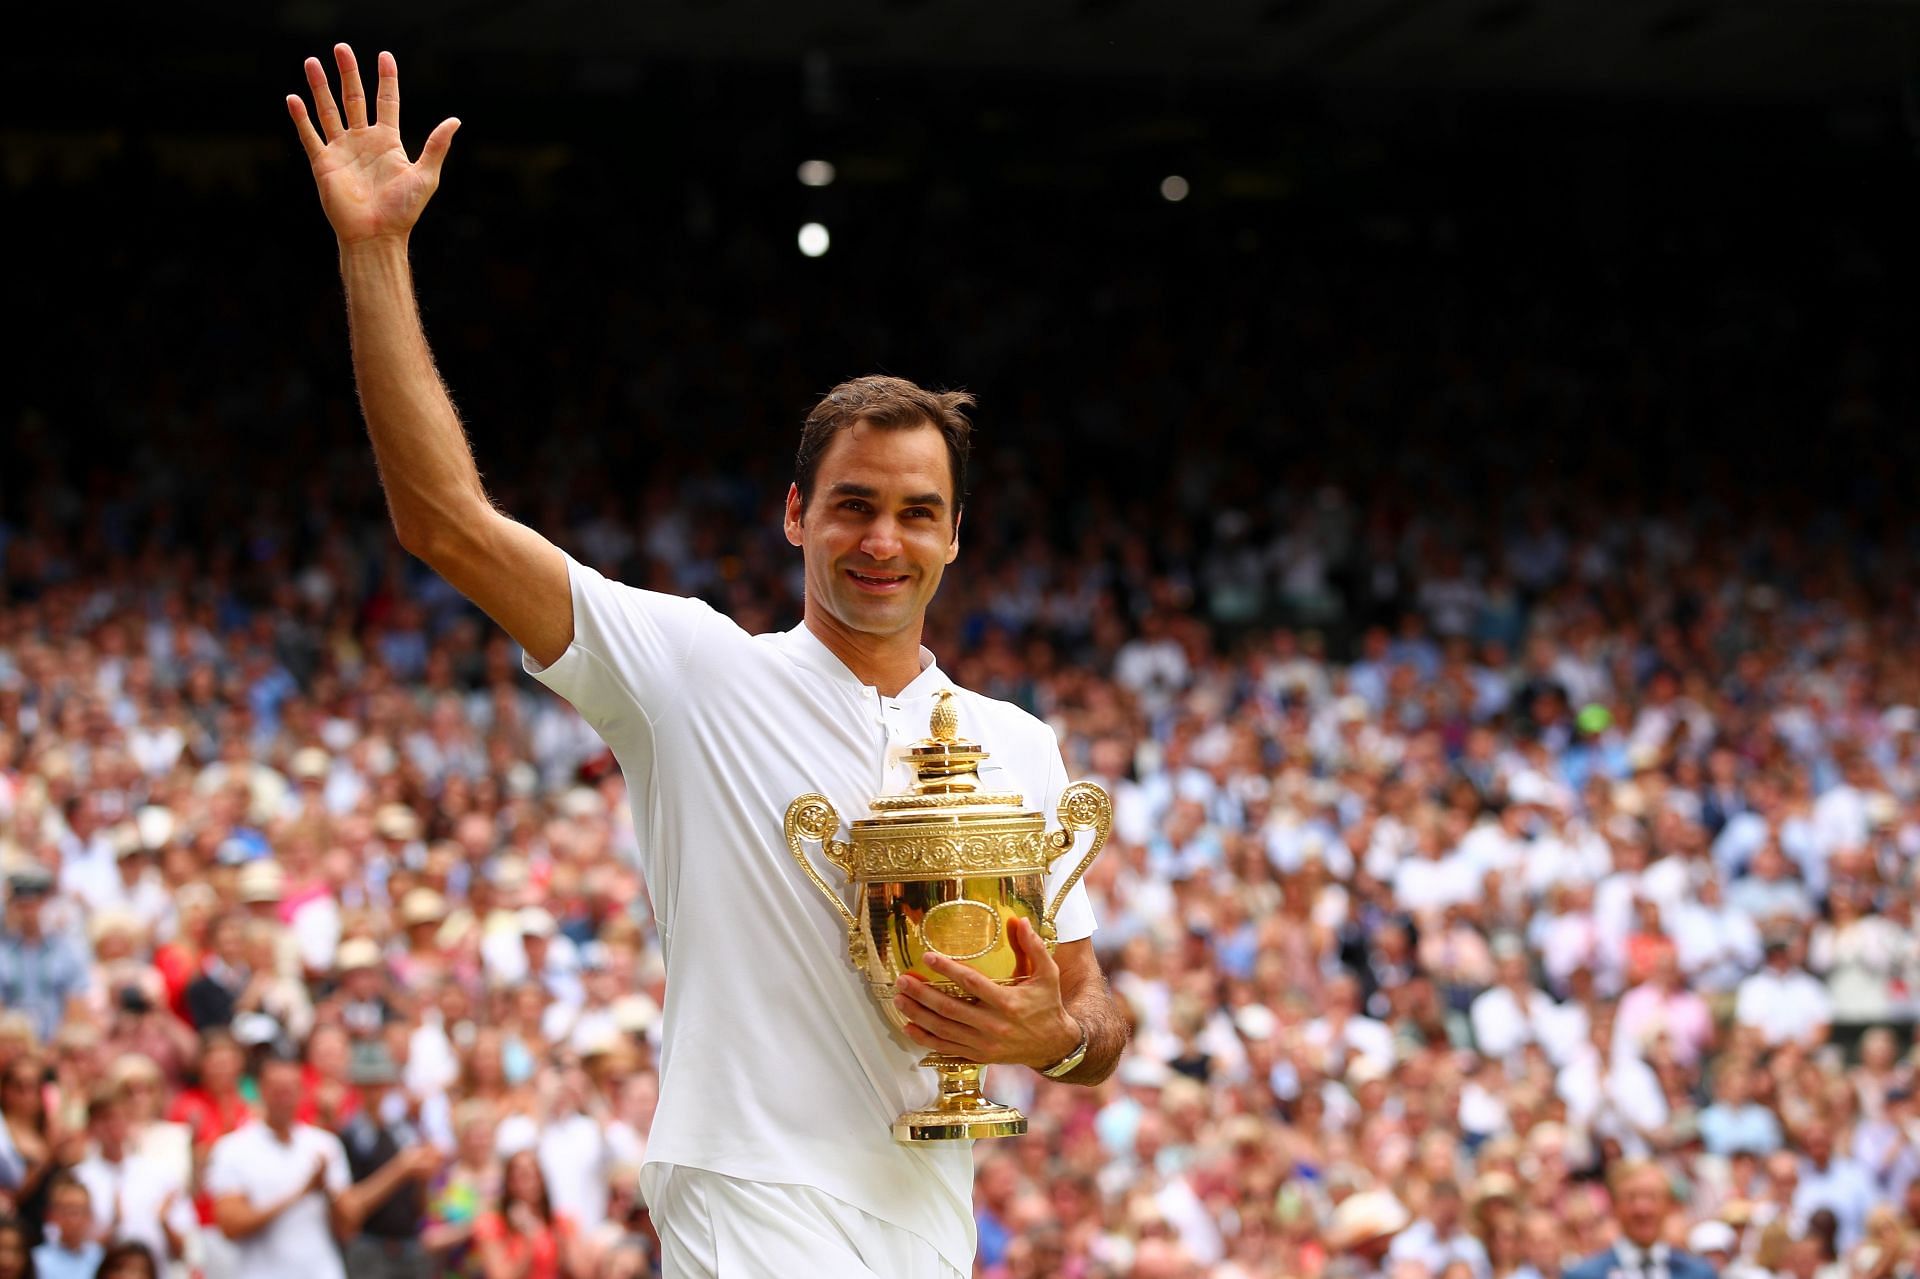 Roger Federer won the Wimbledon 2017 title